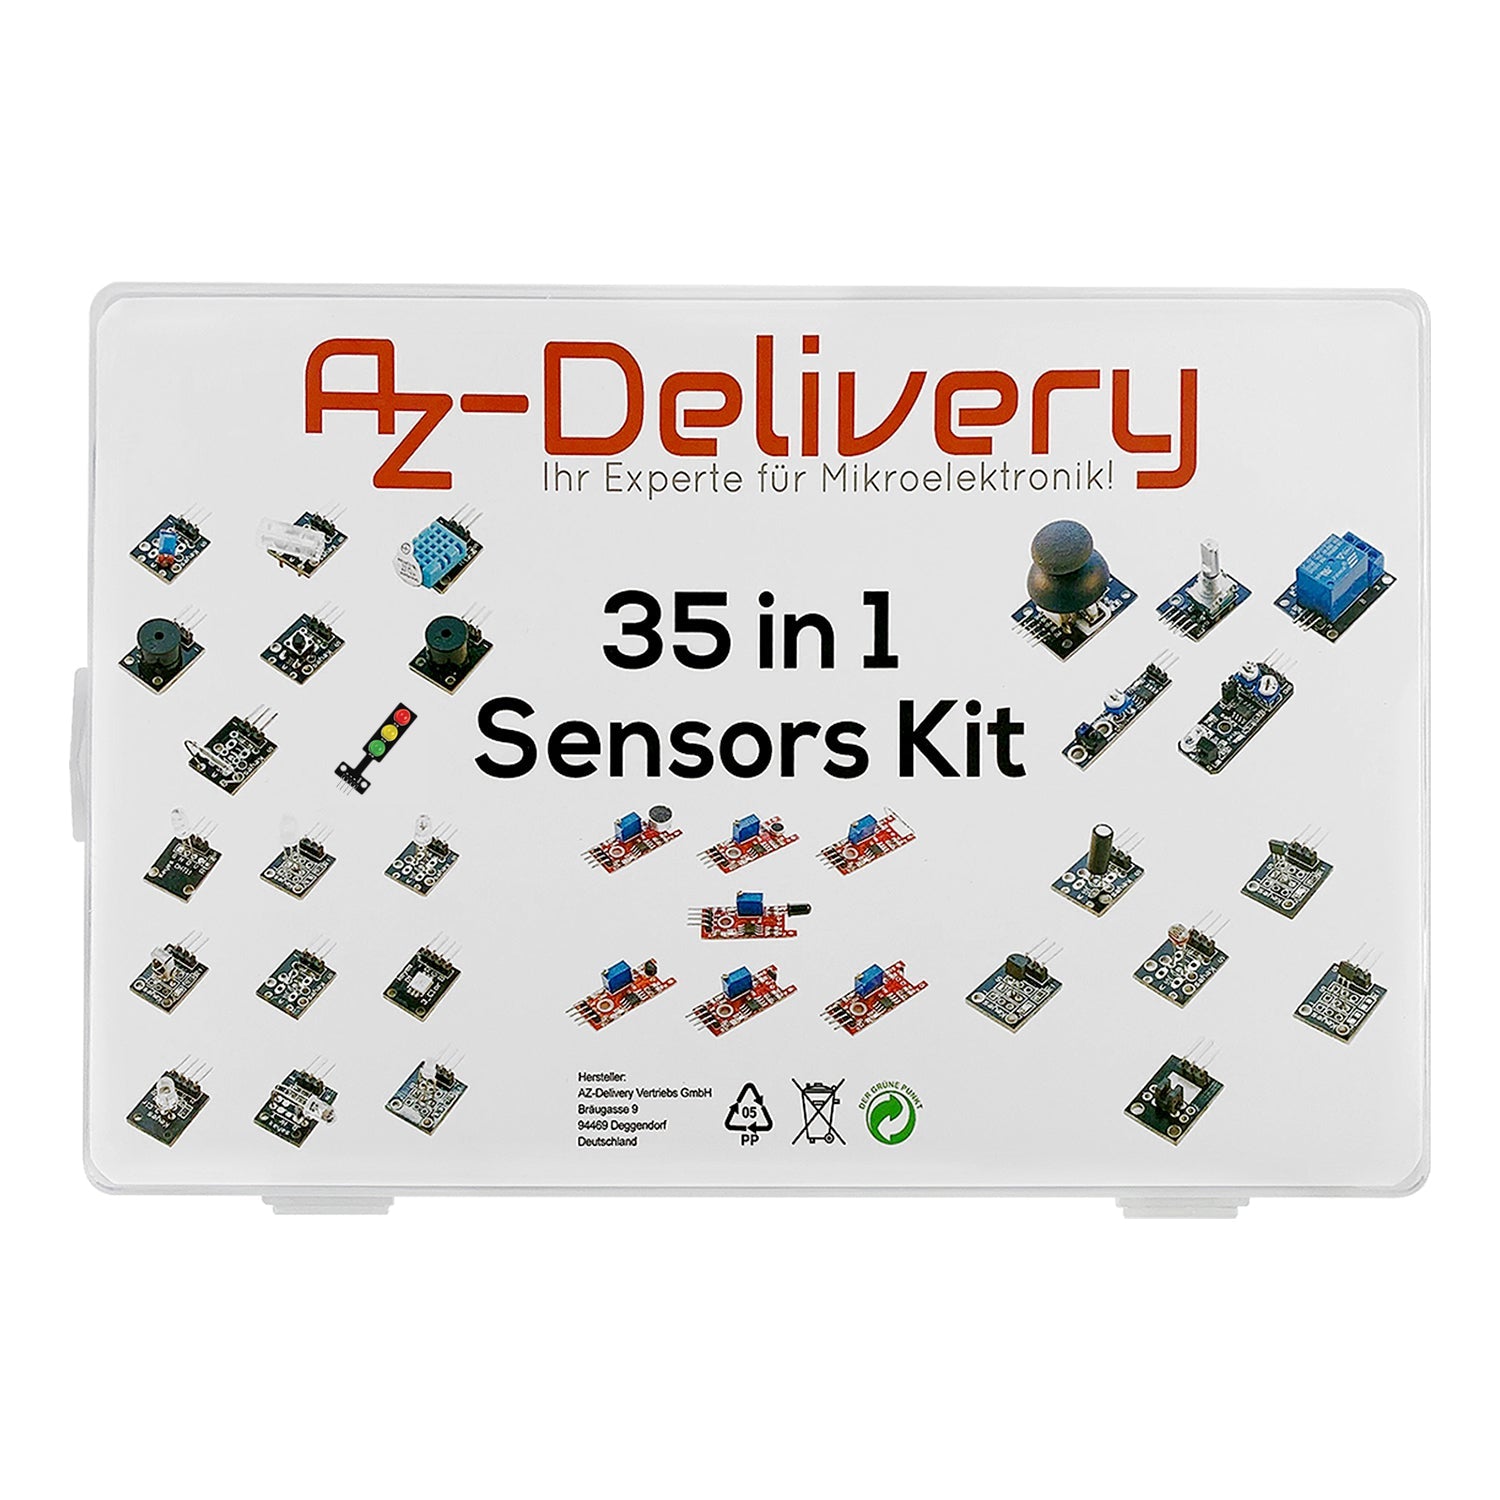 AZ-Delivery Starter Kit kompatibel mit Arduino - AZ-Delivery